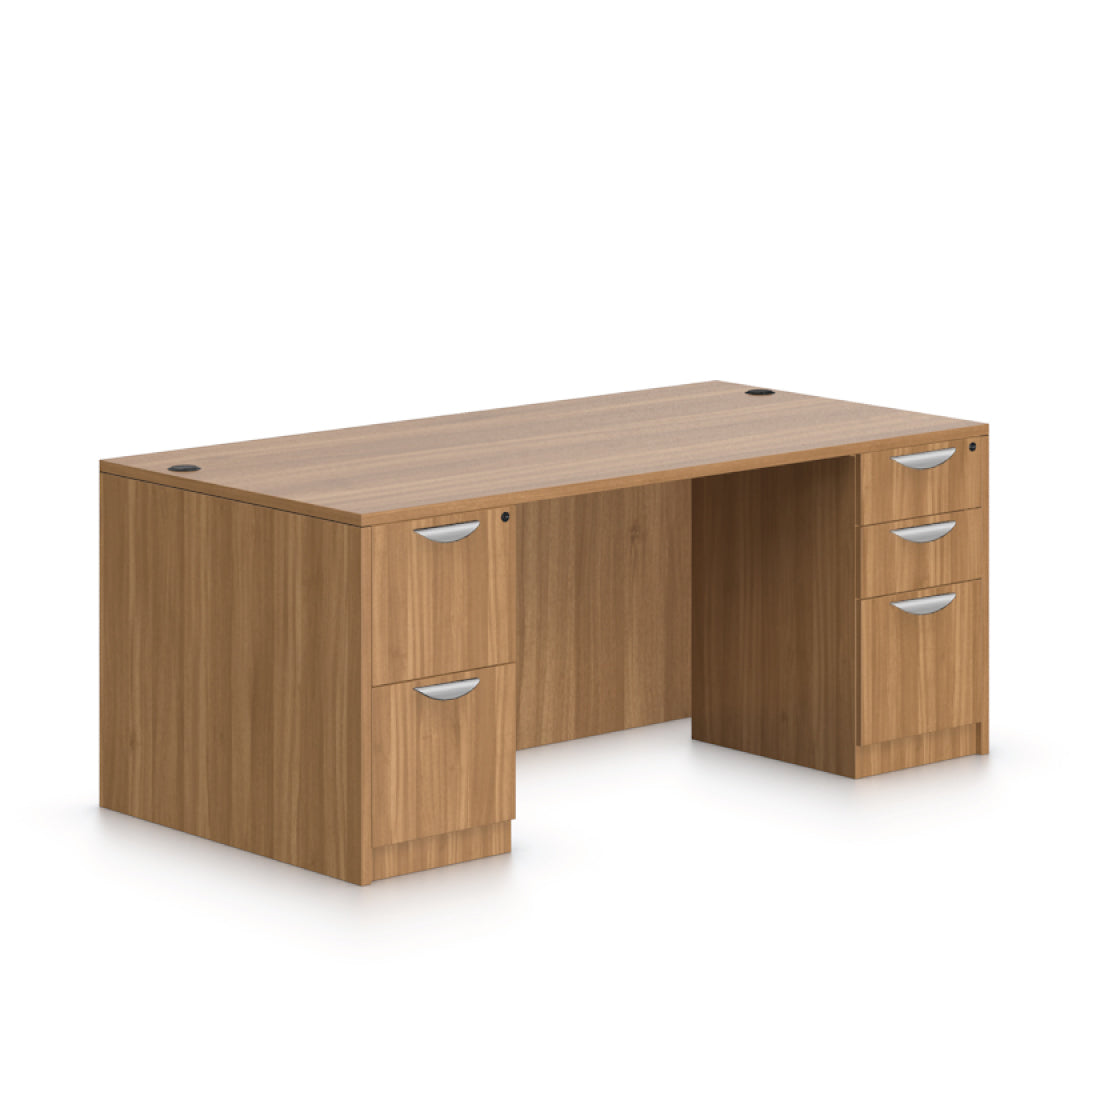 71"x36" Rectangular Desk with B/B/F pedestal and F/F pedestal